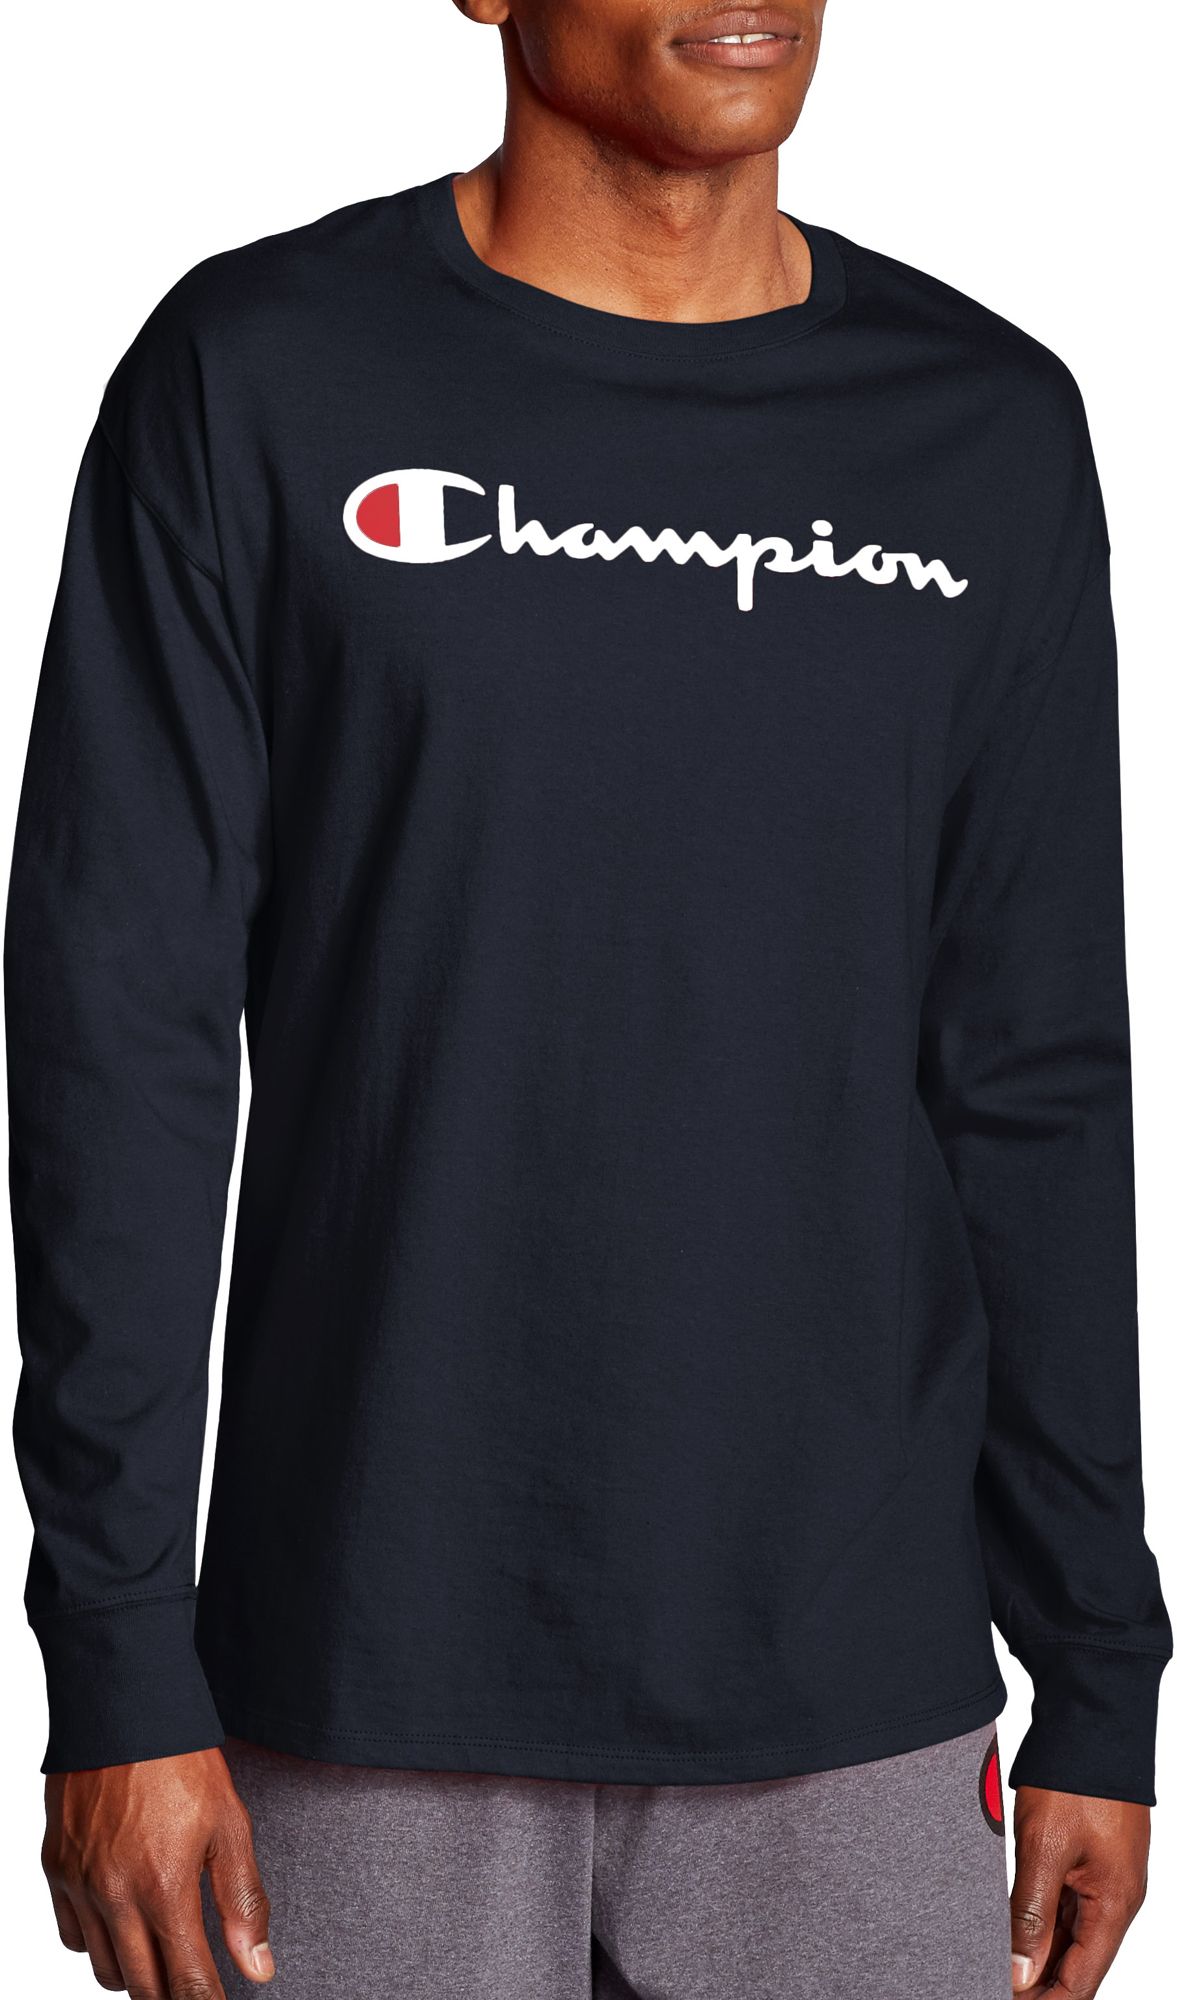 champions shirt long sleeve